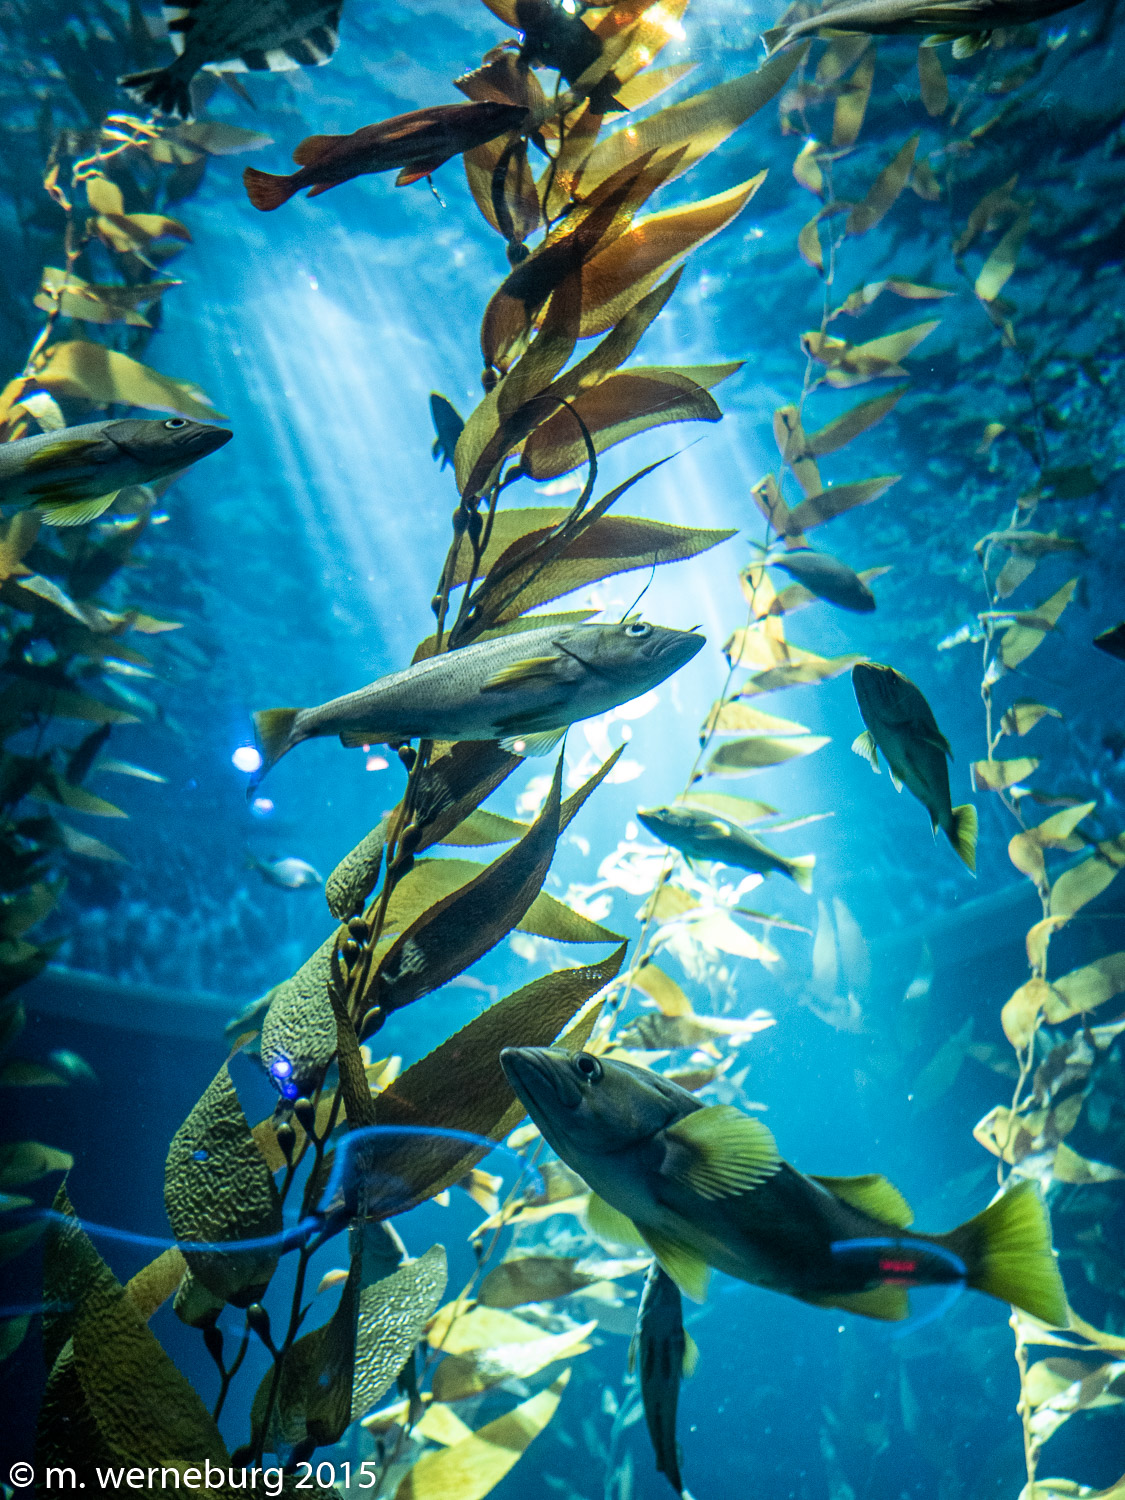 swimming among the kelp